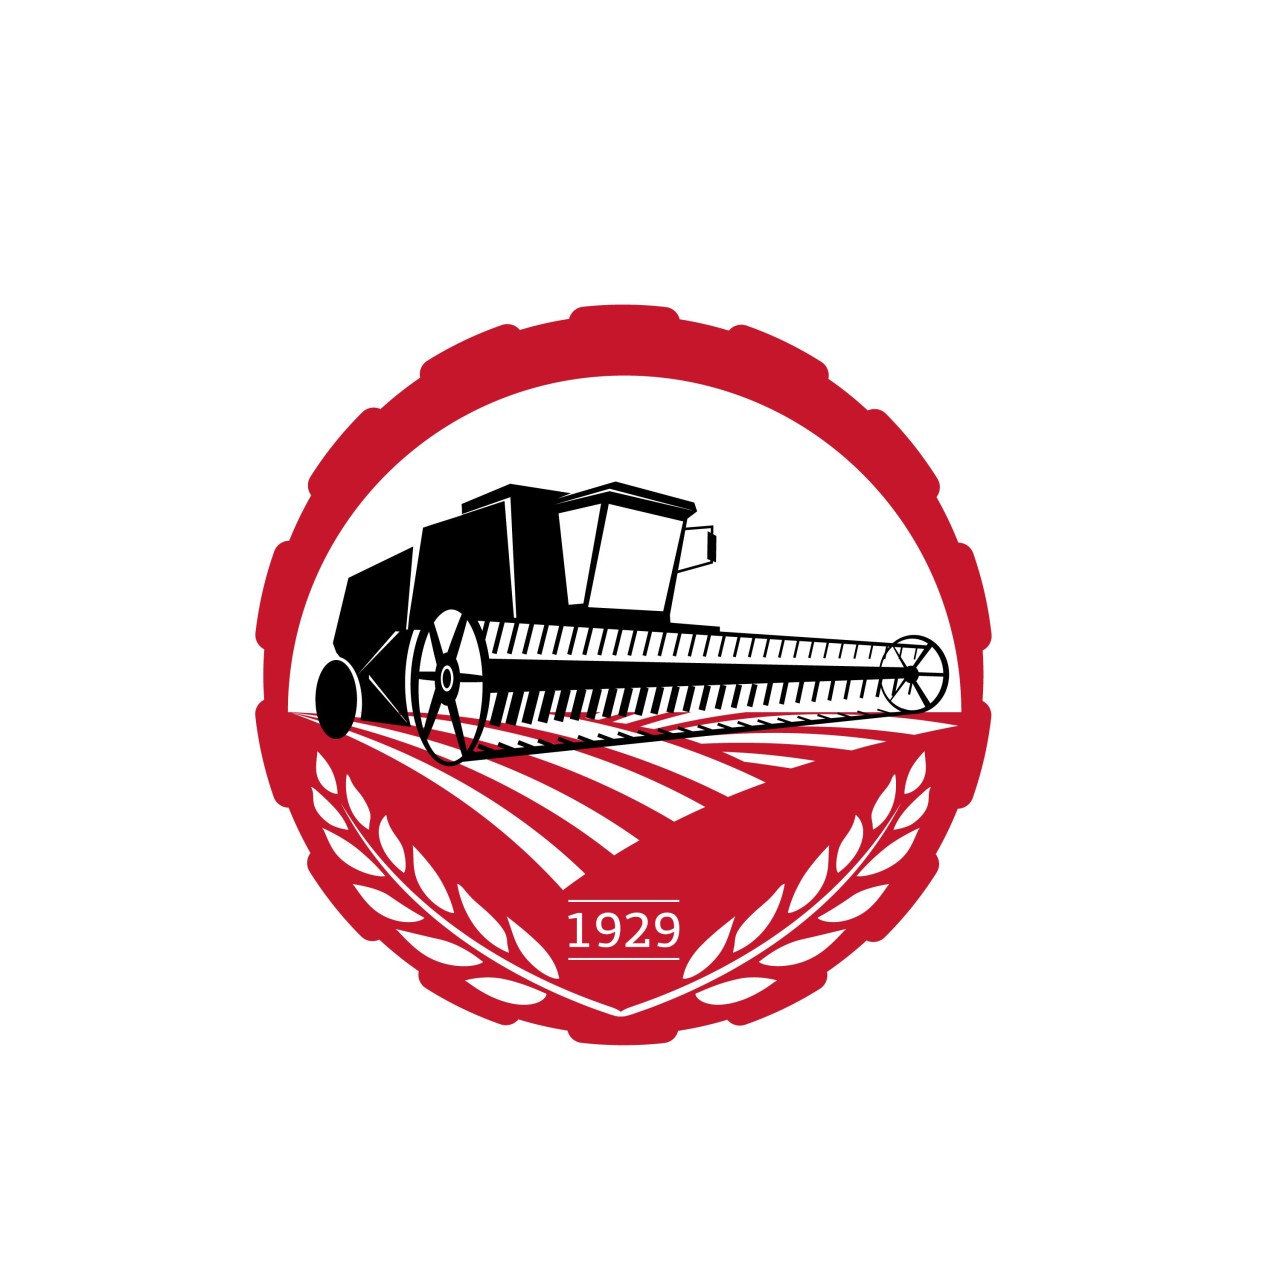 Логотип Ростсельмаш